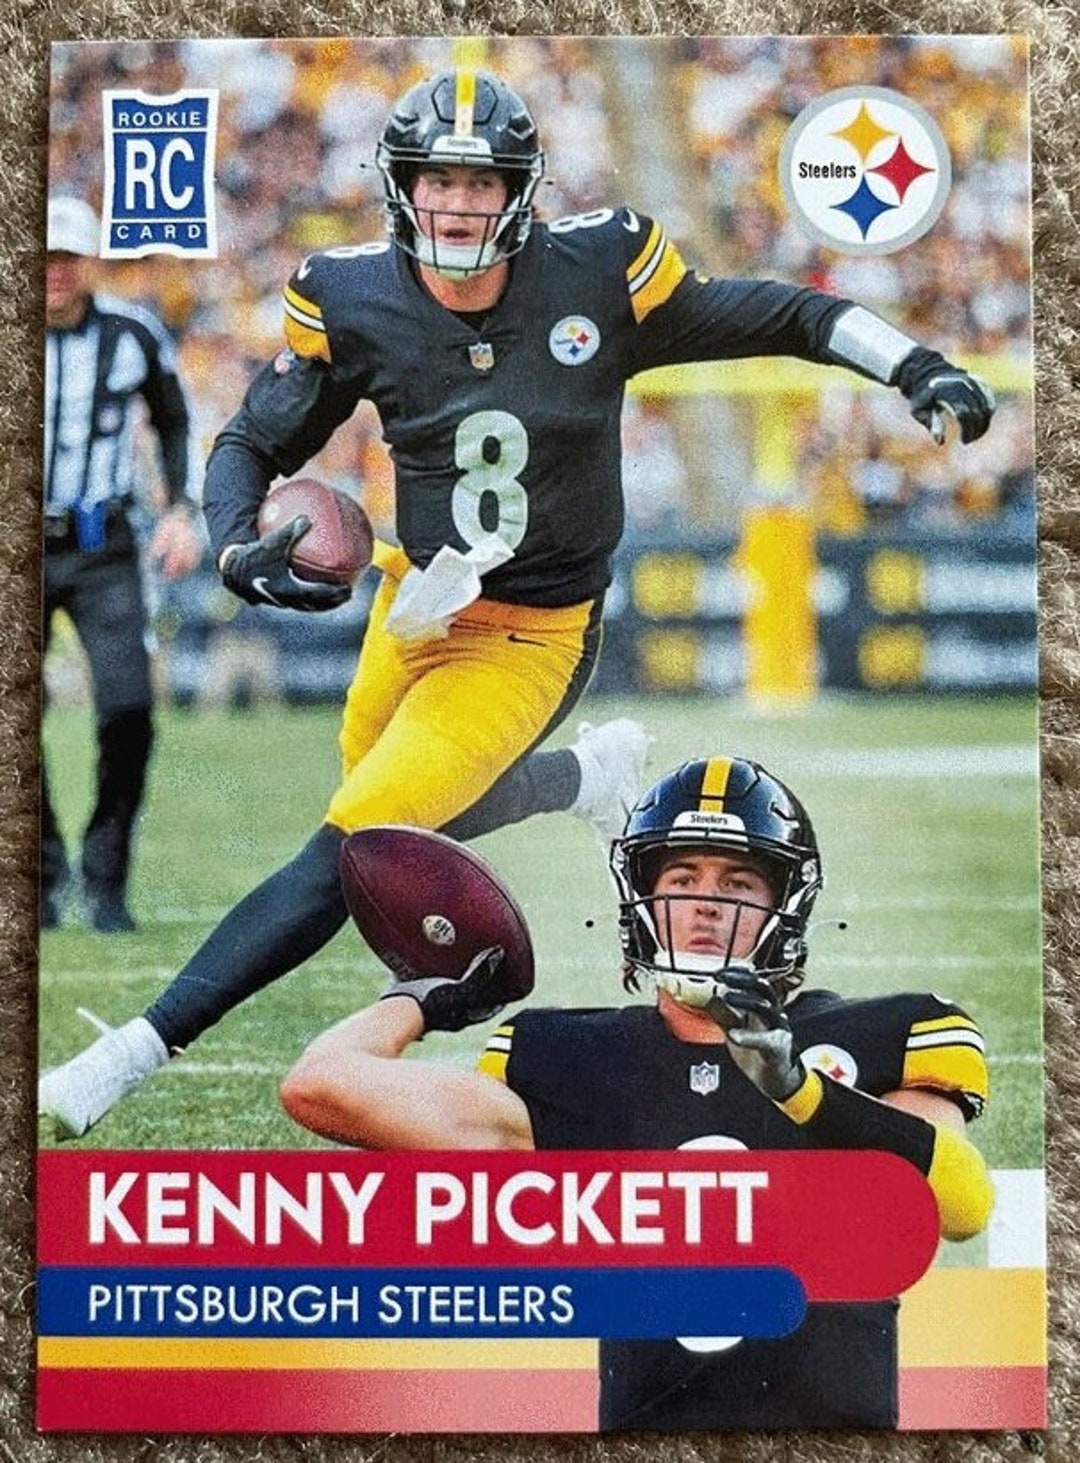 Pitt Business Grad Pickett Is Steelers' #1 Pick - Pitt Business